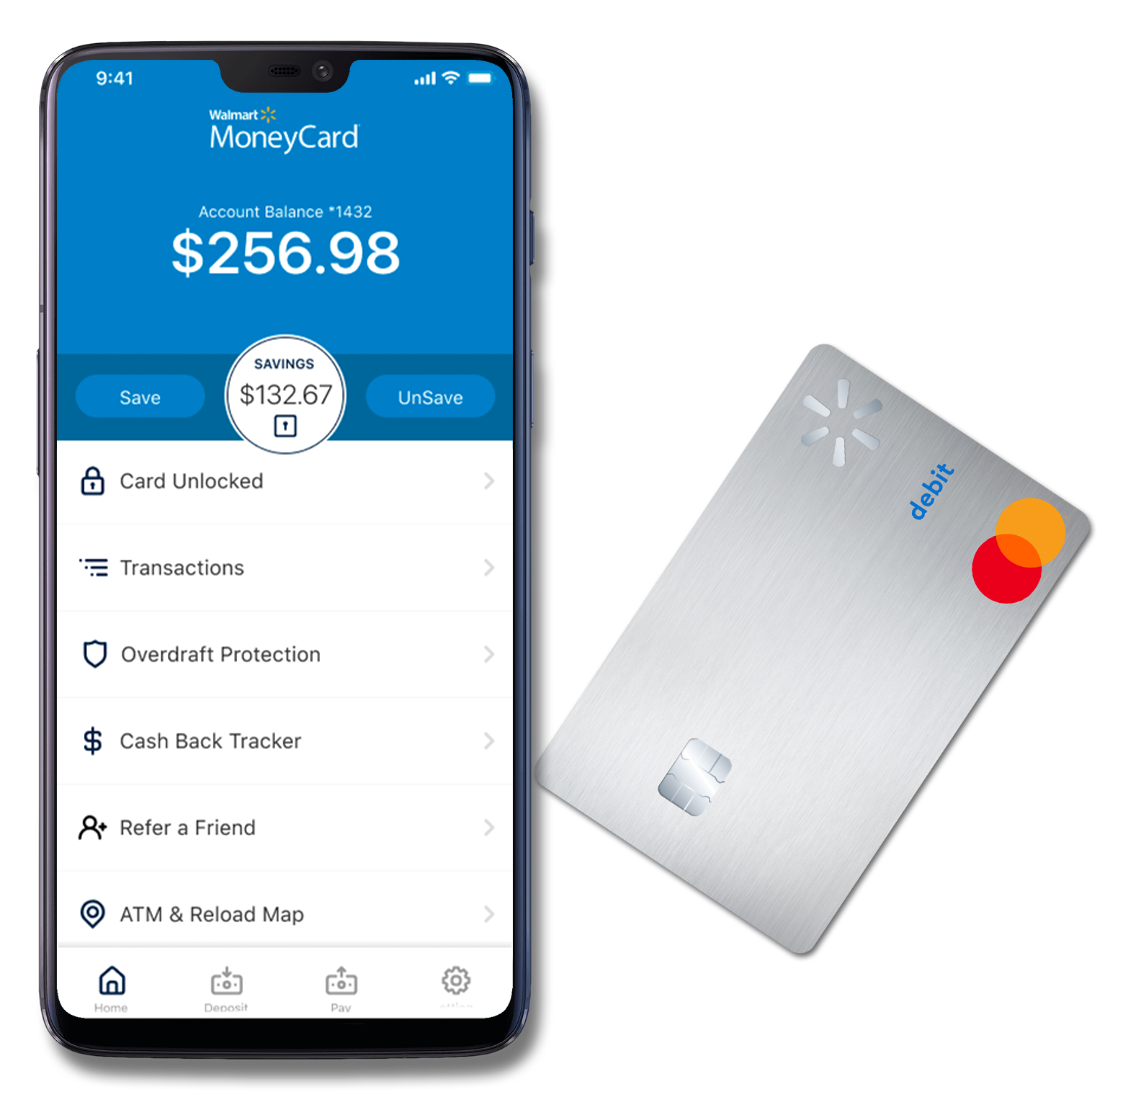 Download the Walmart MoneyCard Mobile App